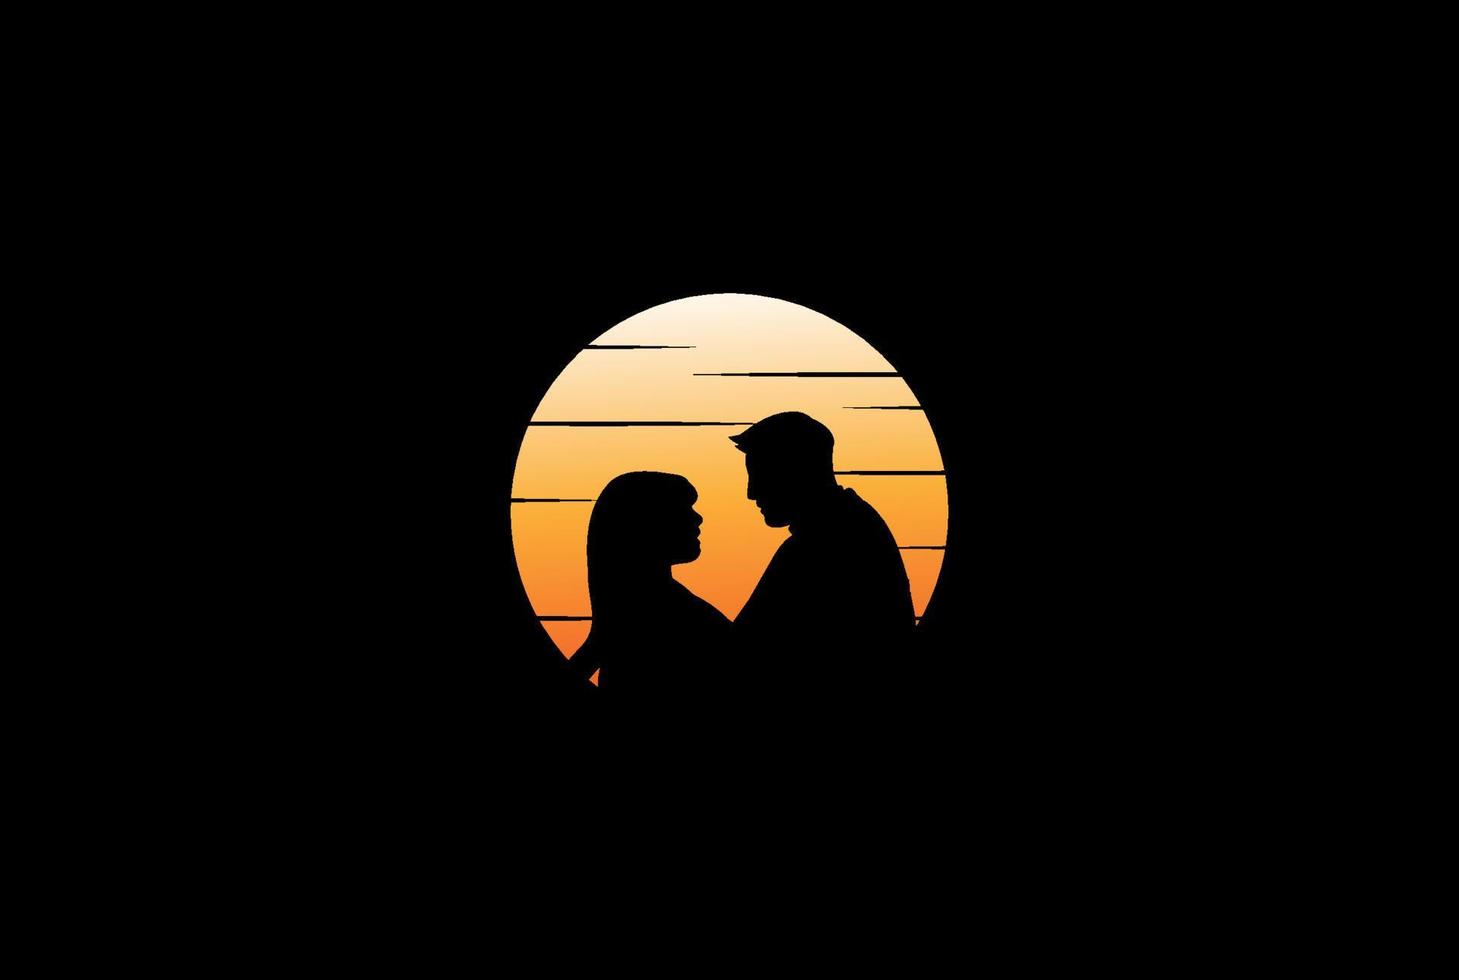 Sunset Romantic Couple for Dating , Valentine Day, Honeymoon, Love or Wedding Logo Design Vector